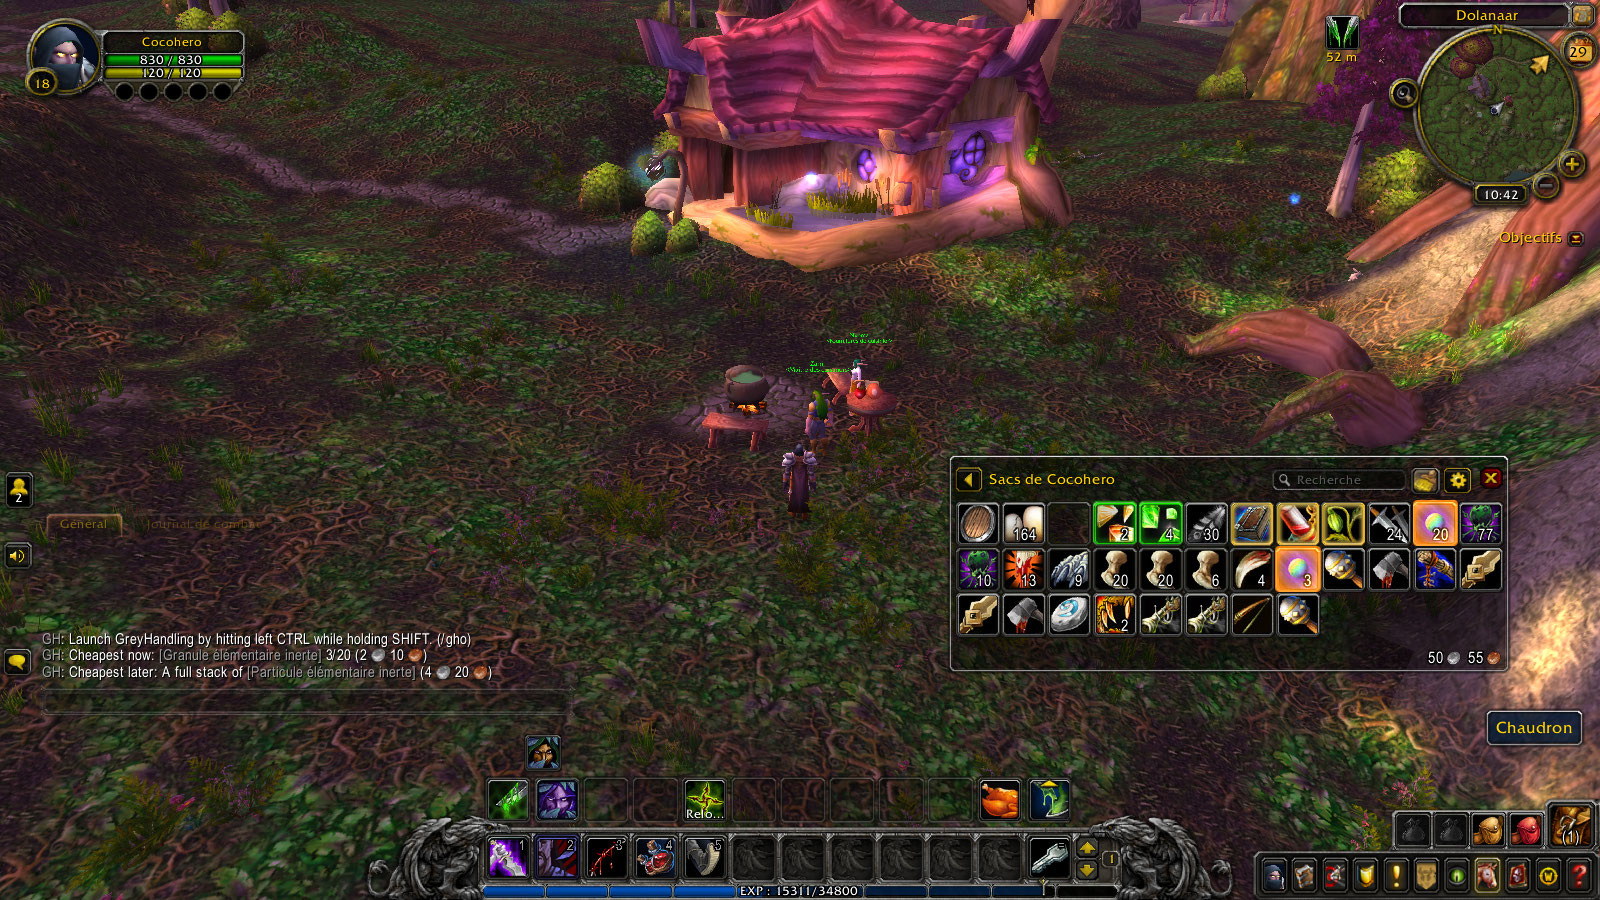 TrashTalk - World of Warcraft Addons - CurseForge